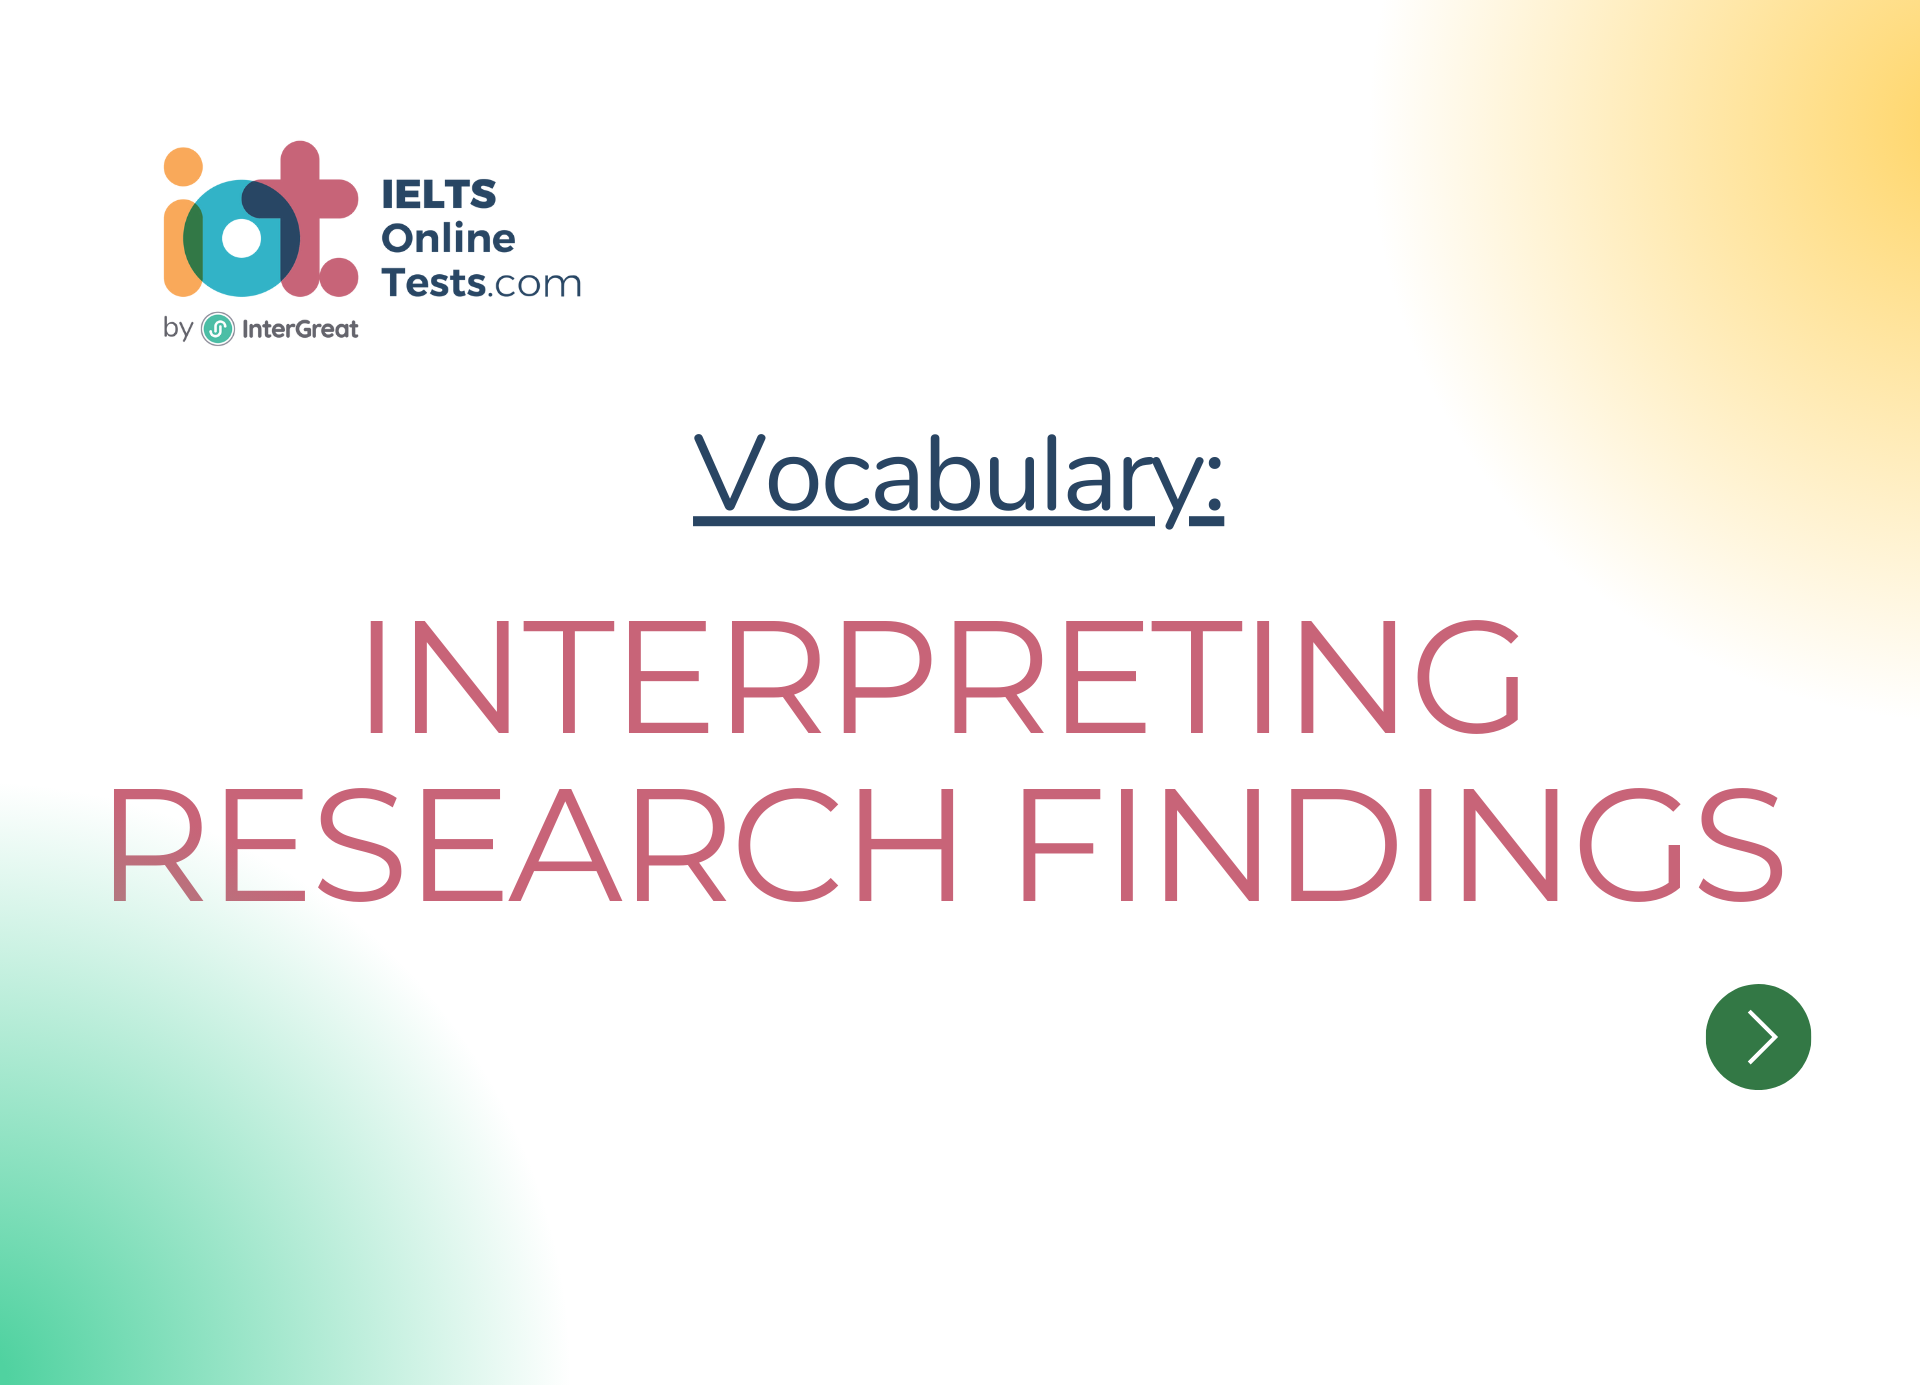 Interpreting research findings